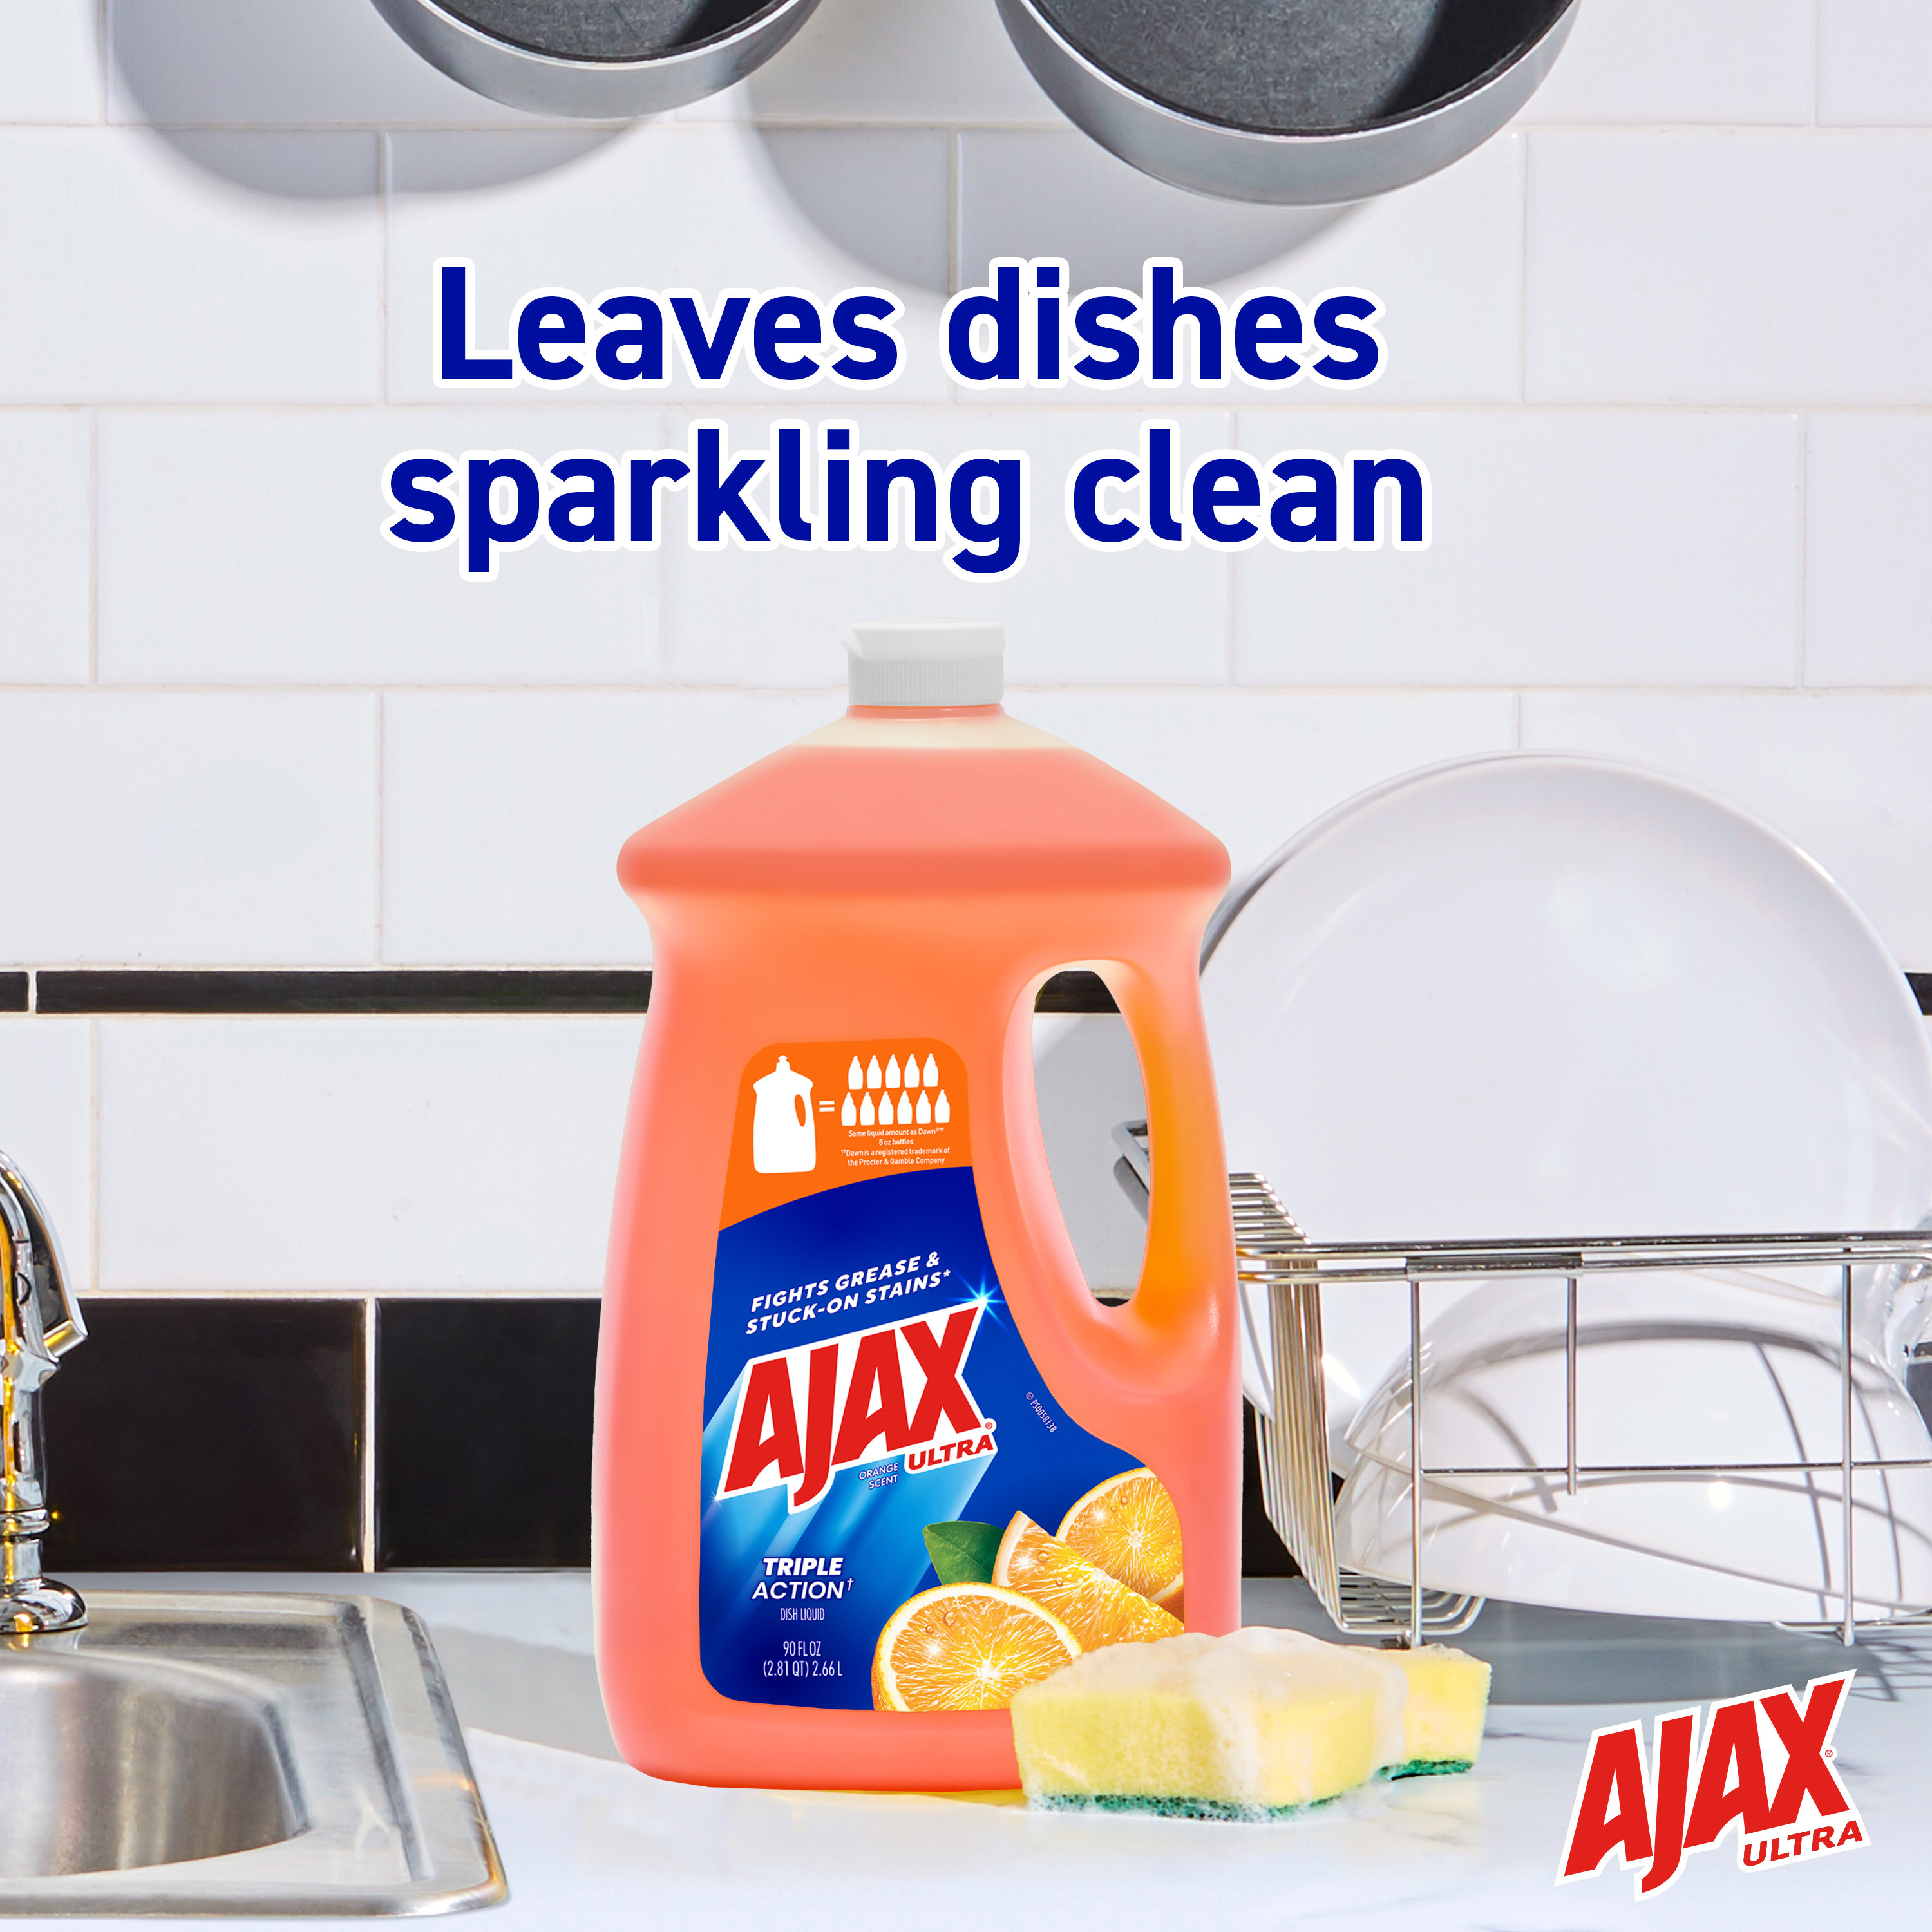 Ajax Ultra Liquid Dish Soap Orange Scent, Triple Action, 90 oz Bottle - image 3 of 16